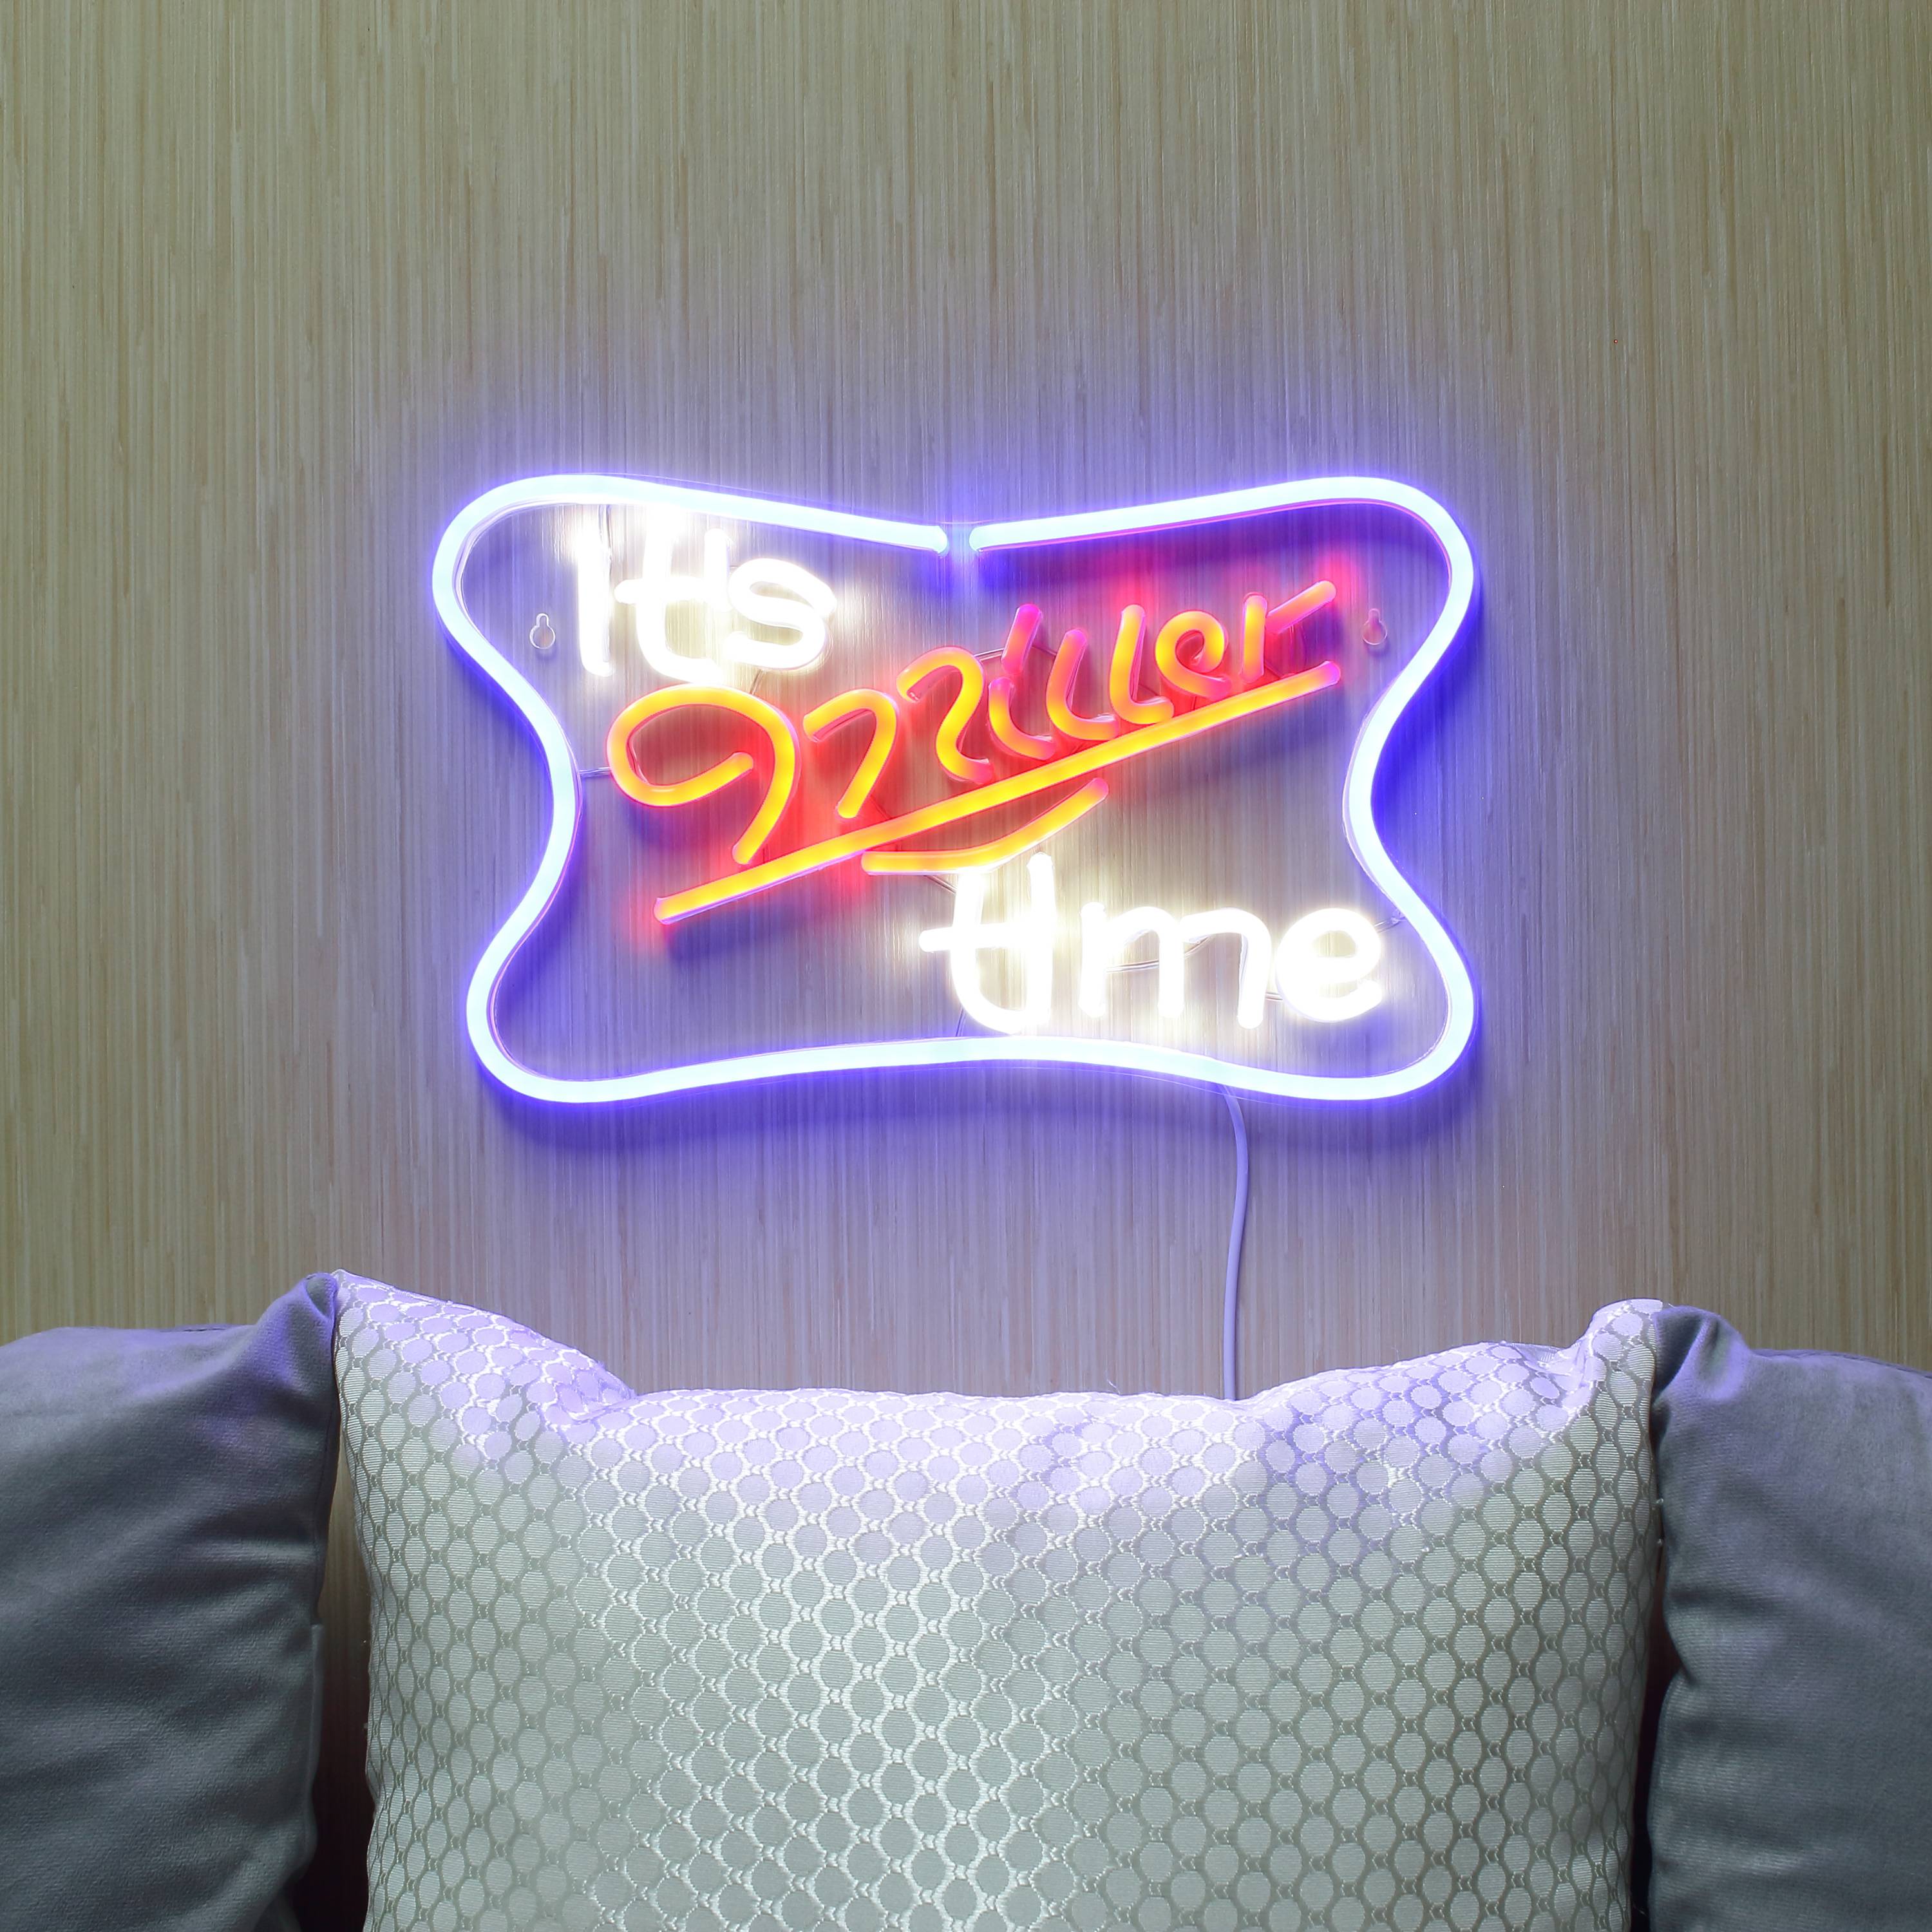 It's Miller time Large Flex Neon LED Sign